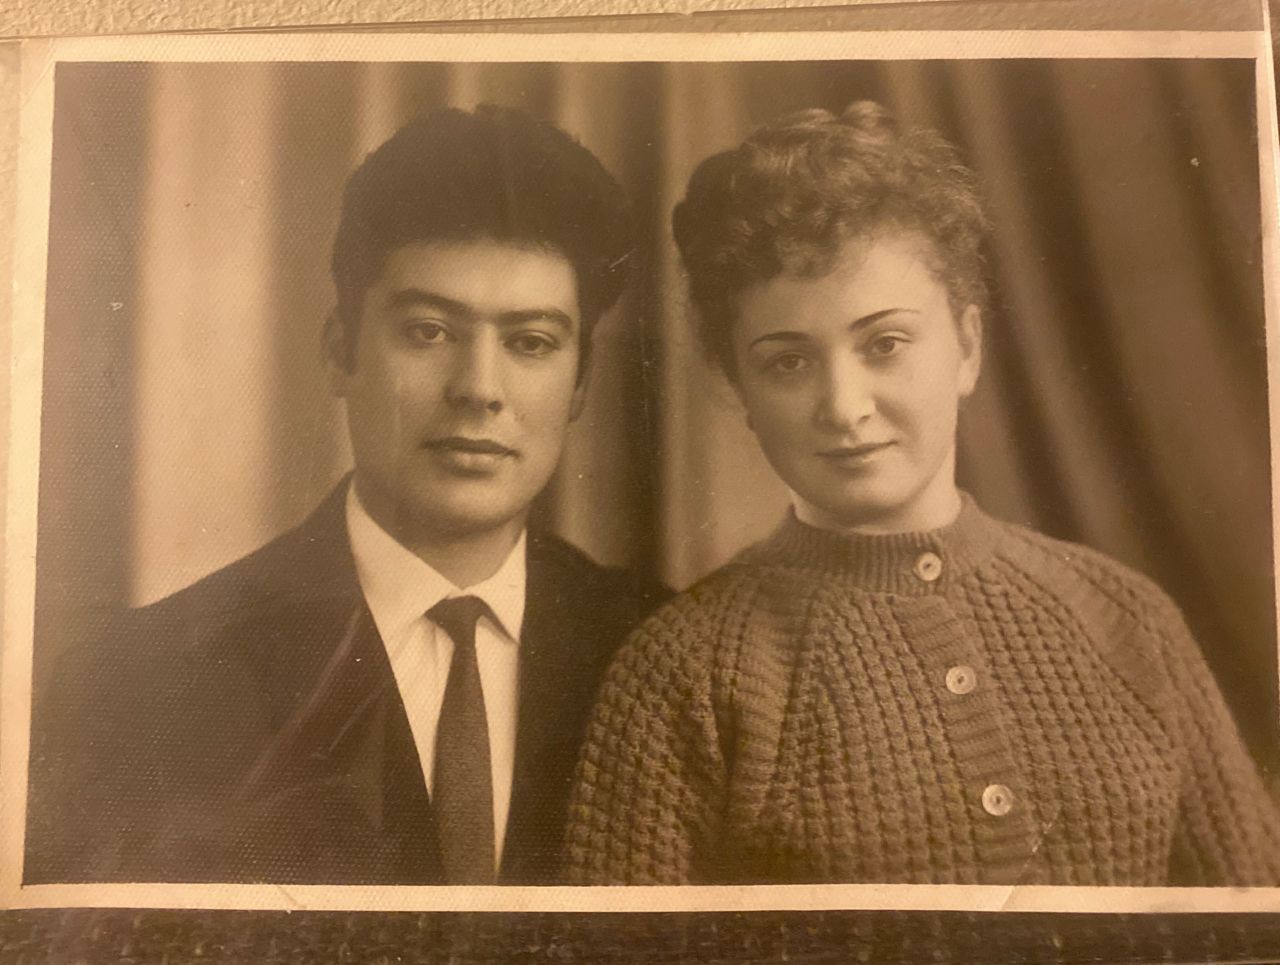 Edgar and Sofiya's first photo together, taken 63 years ago in Kiev, Ukraine.